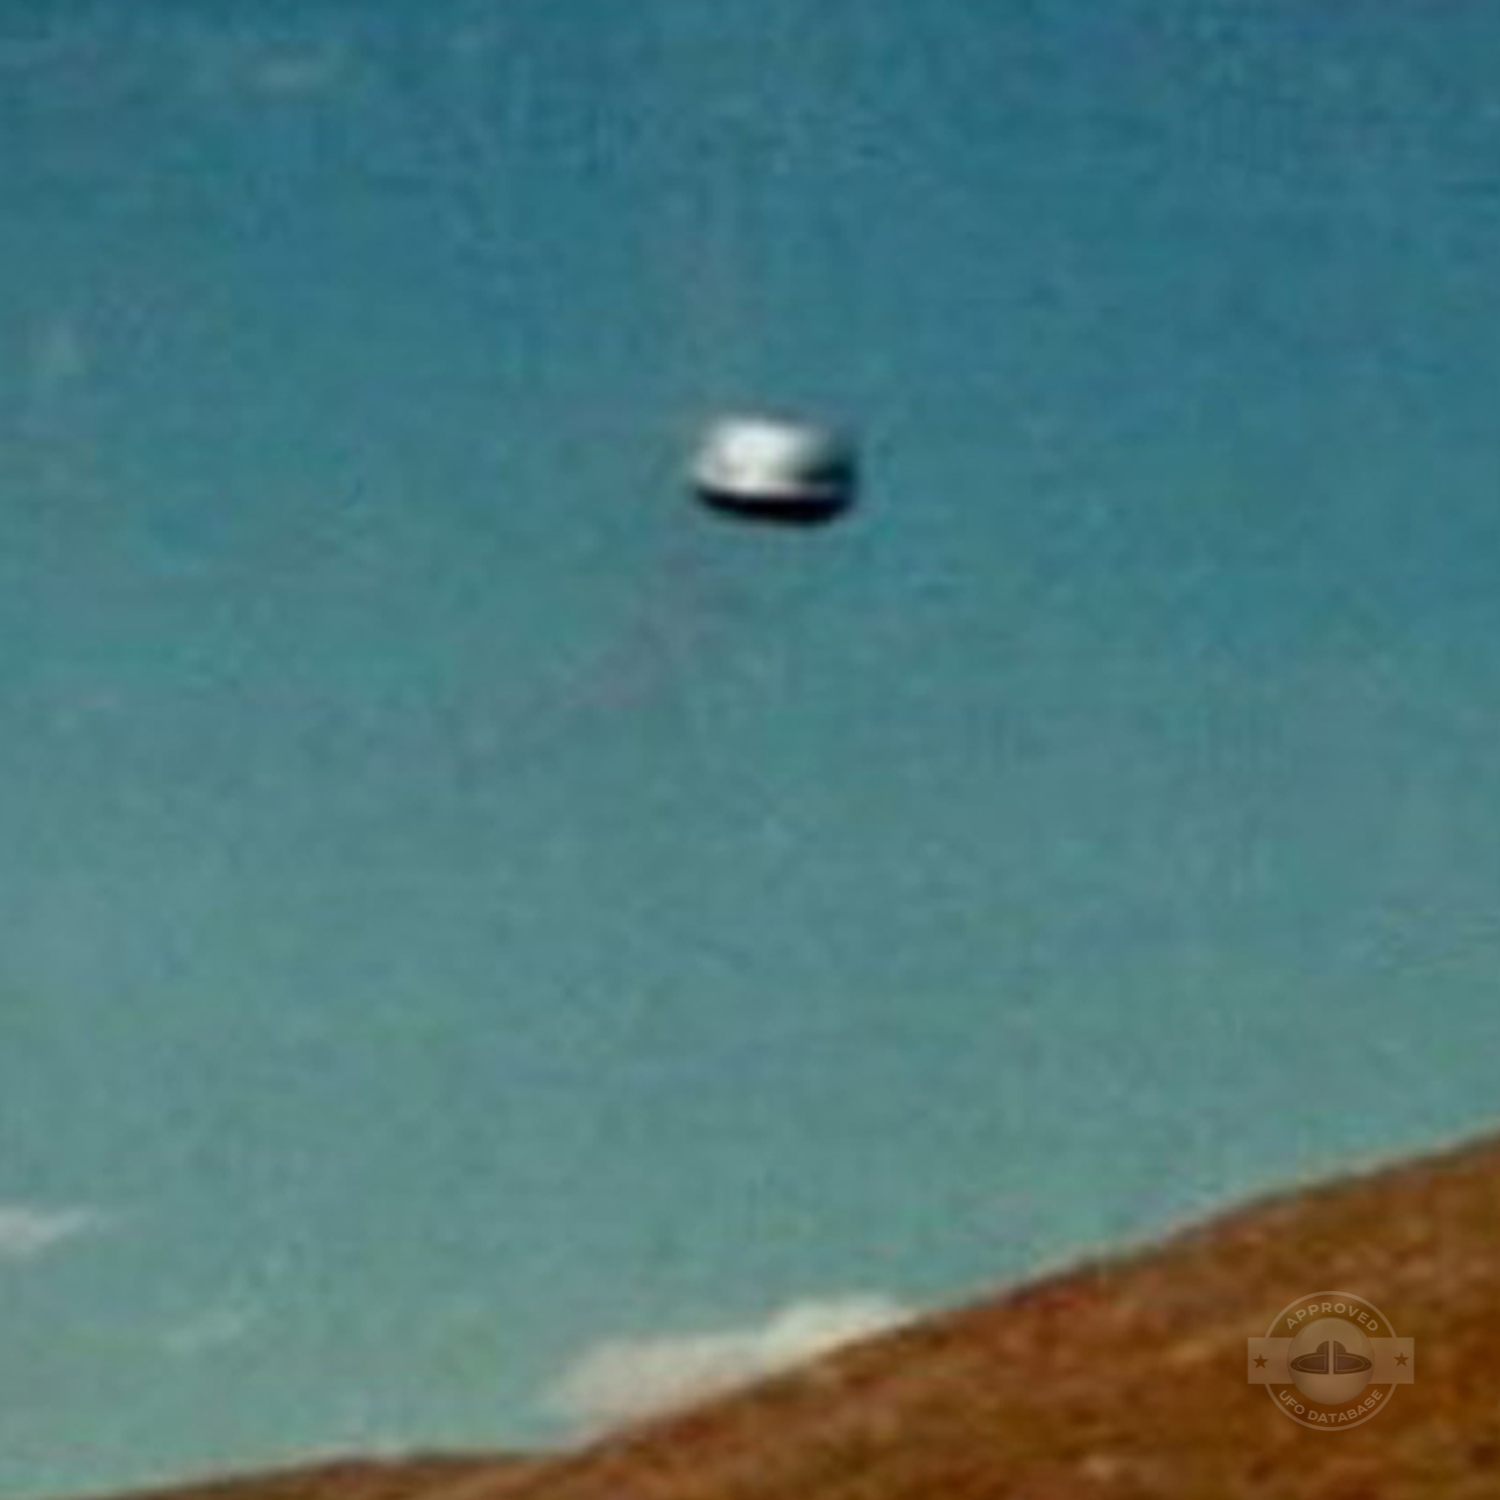 Yamanlar Mountain Peak Hitchhikers UFO Picture | Izmir, Turkey 1996 UFO Picture #182-4